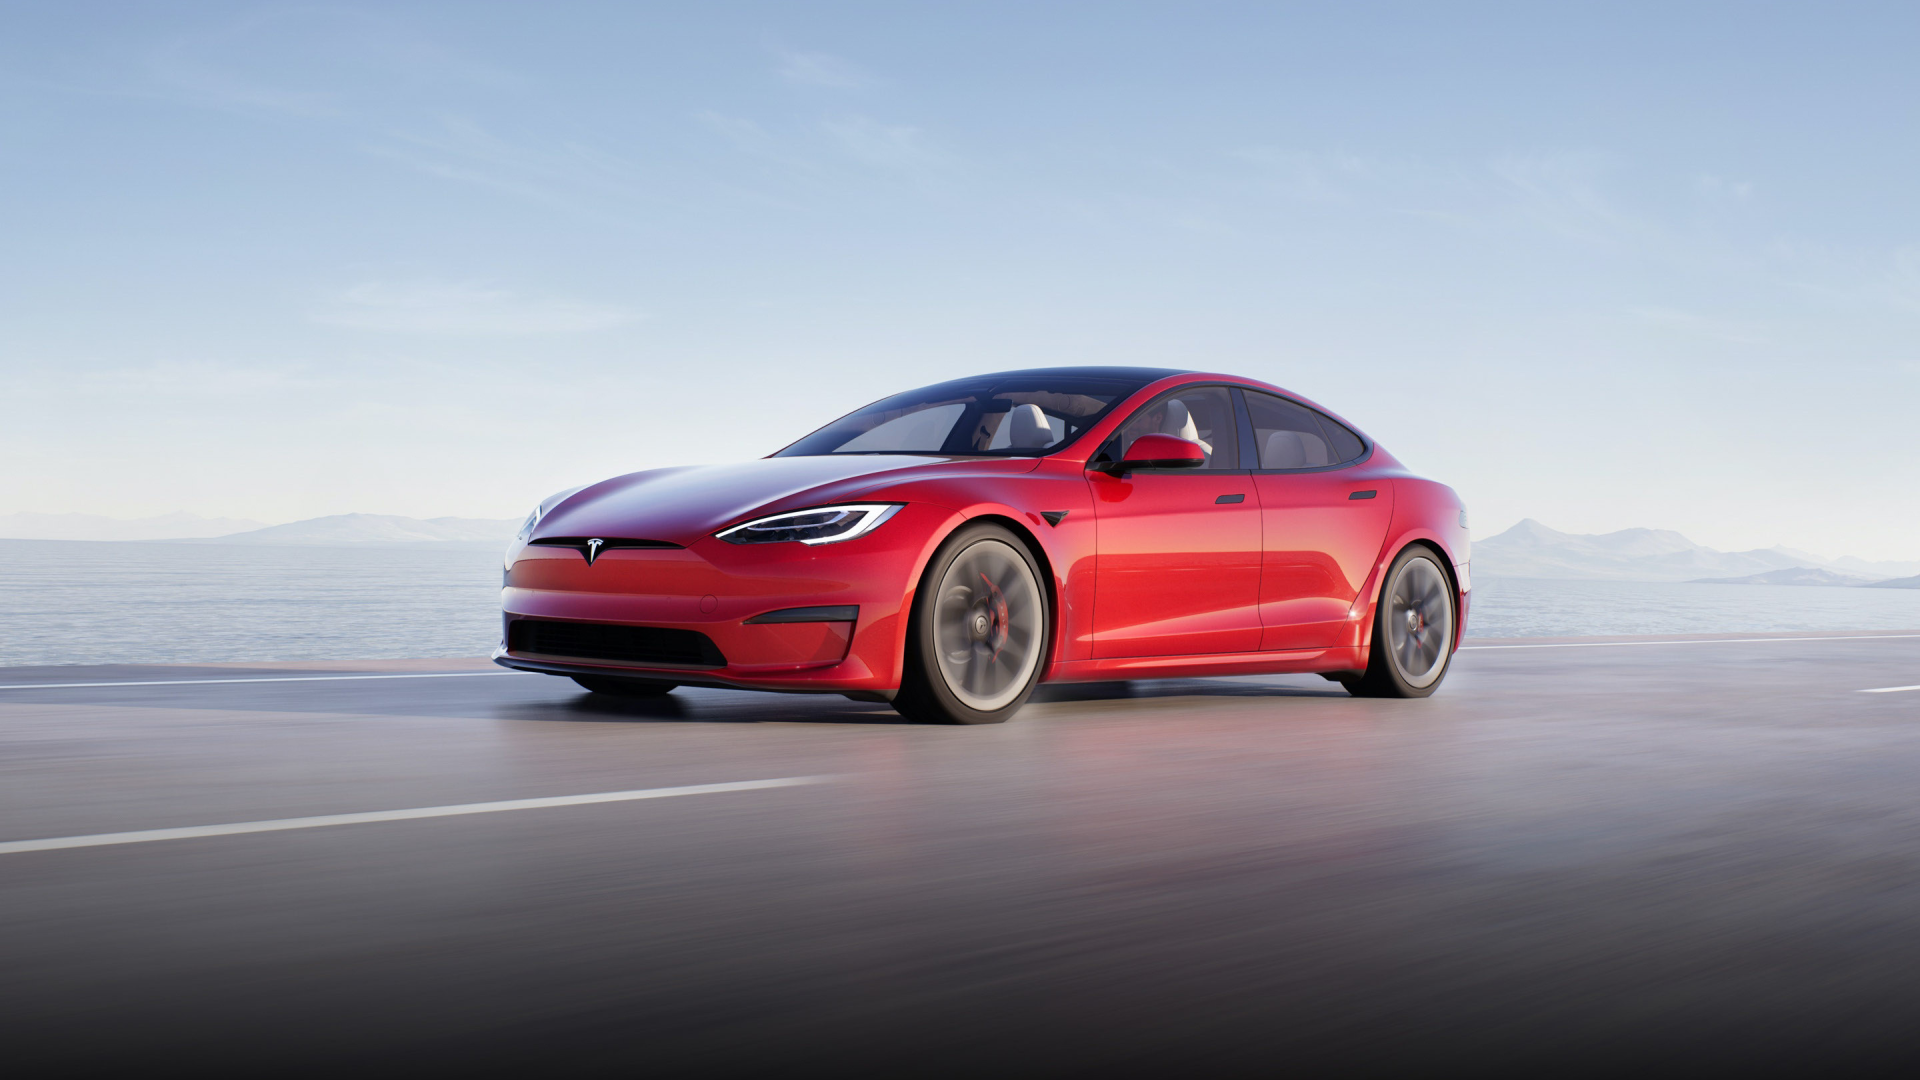 Tesla ปรับลดราคาอีวี Model S และ Model X ในสหรัฐฯ อย่างหนักหน่วง สูงสุด 344,000 บาท